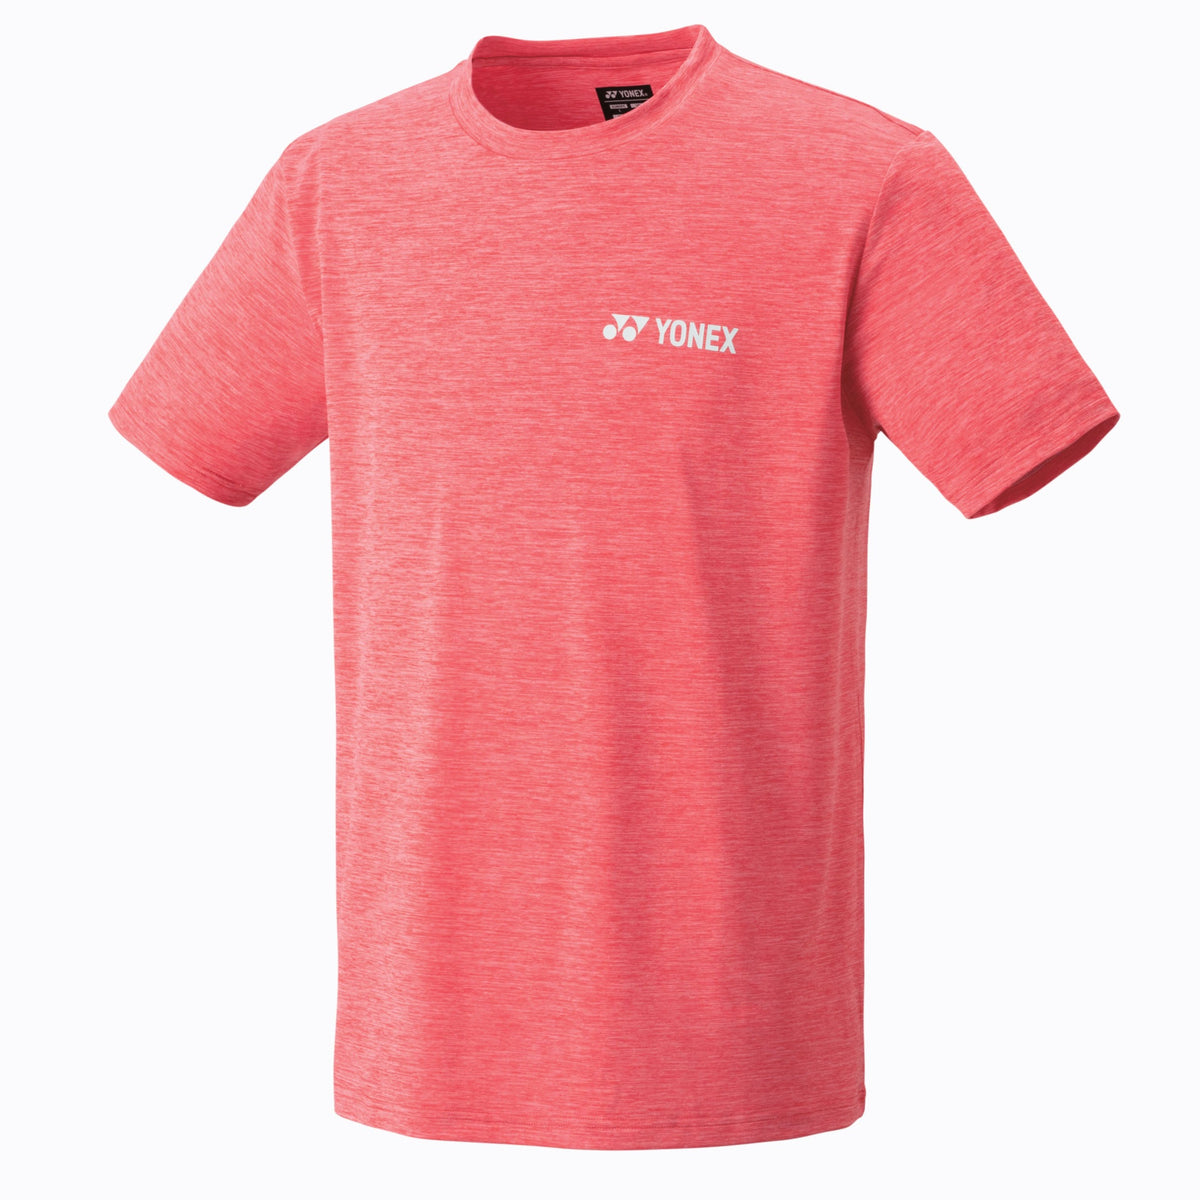 Yonex Unisex Shirt pink